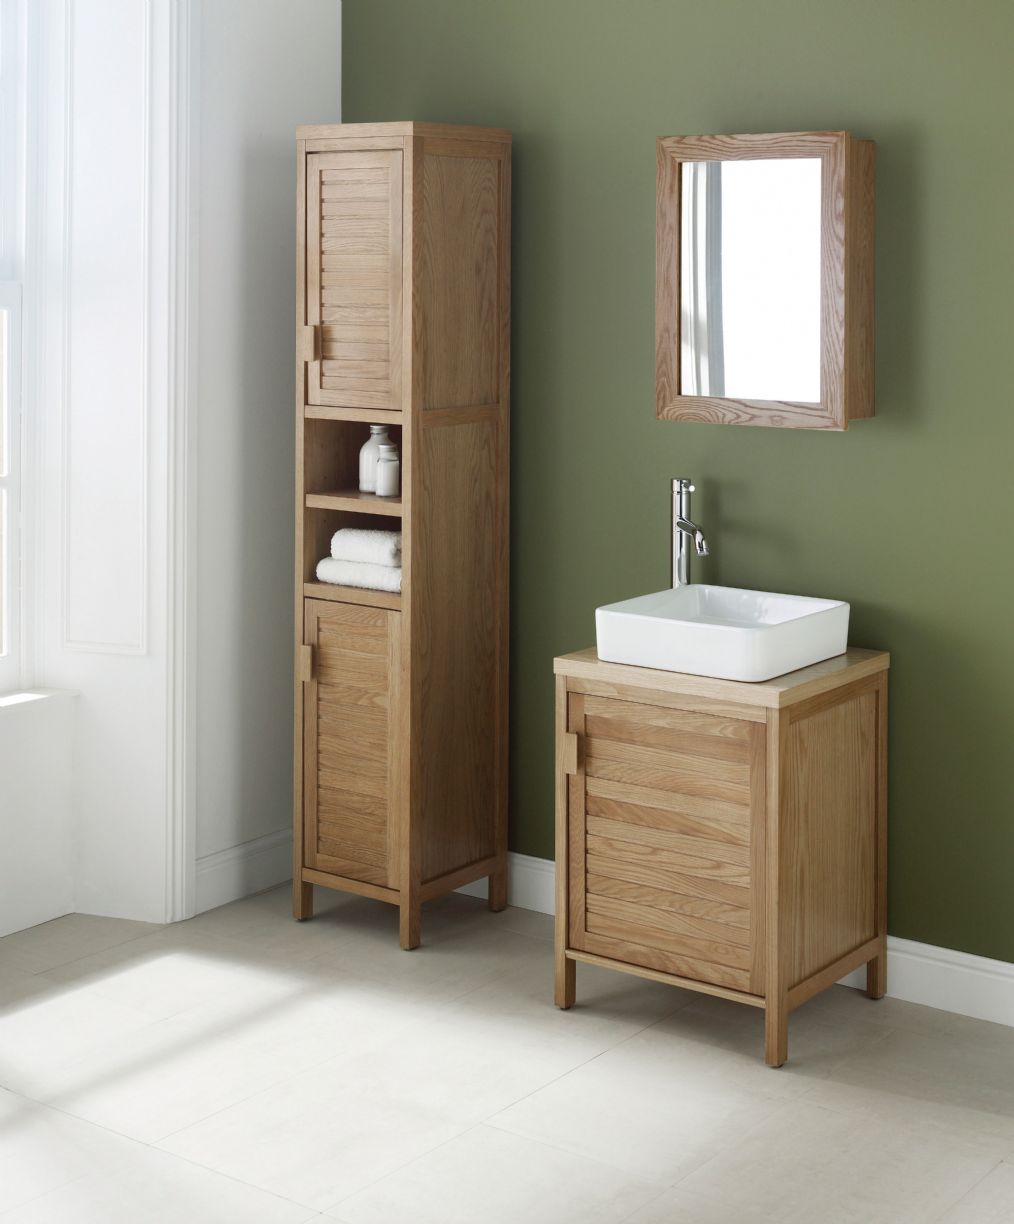 Pictures of free standing bathroom corner cabinets - Freestanding Bathroom Furniture  Ideas Solution - freestanding bathroom furniture cabinets